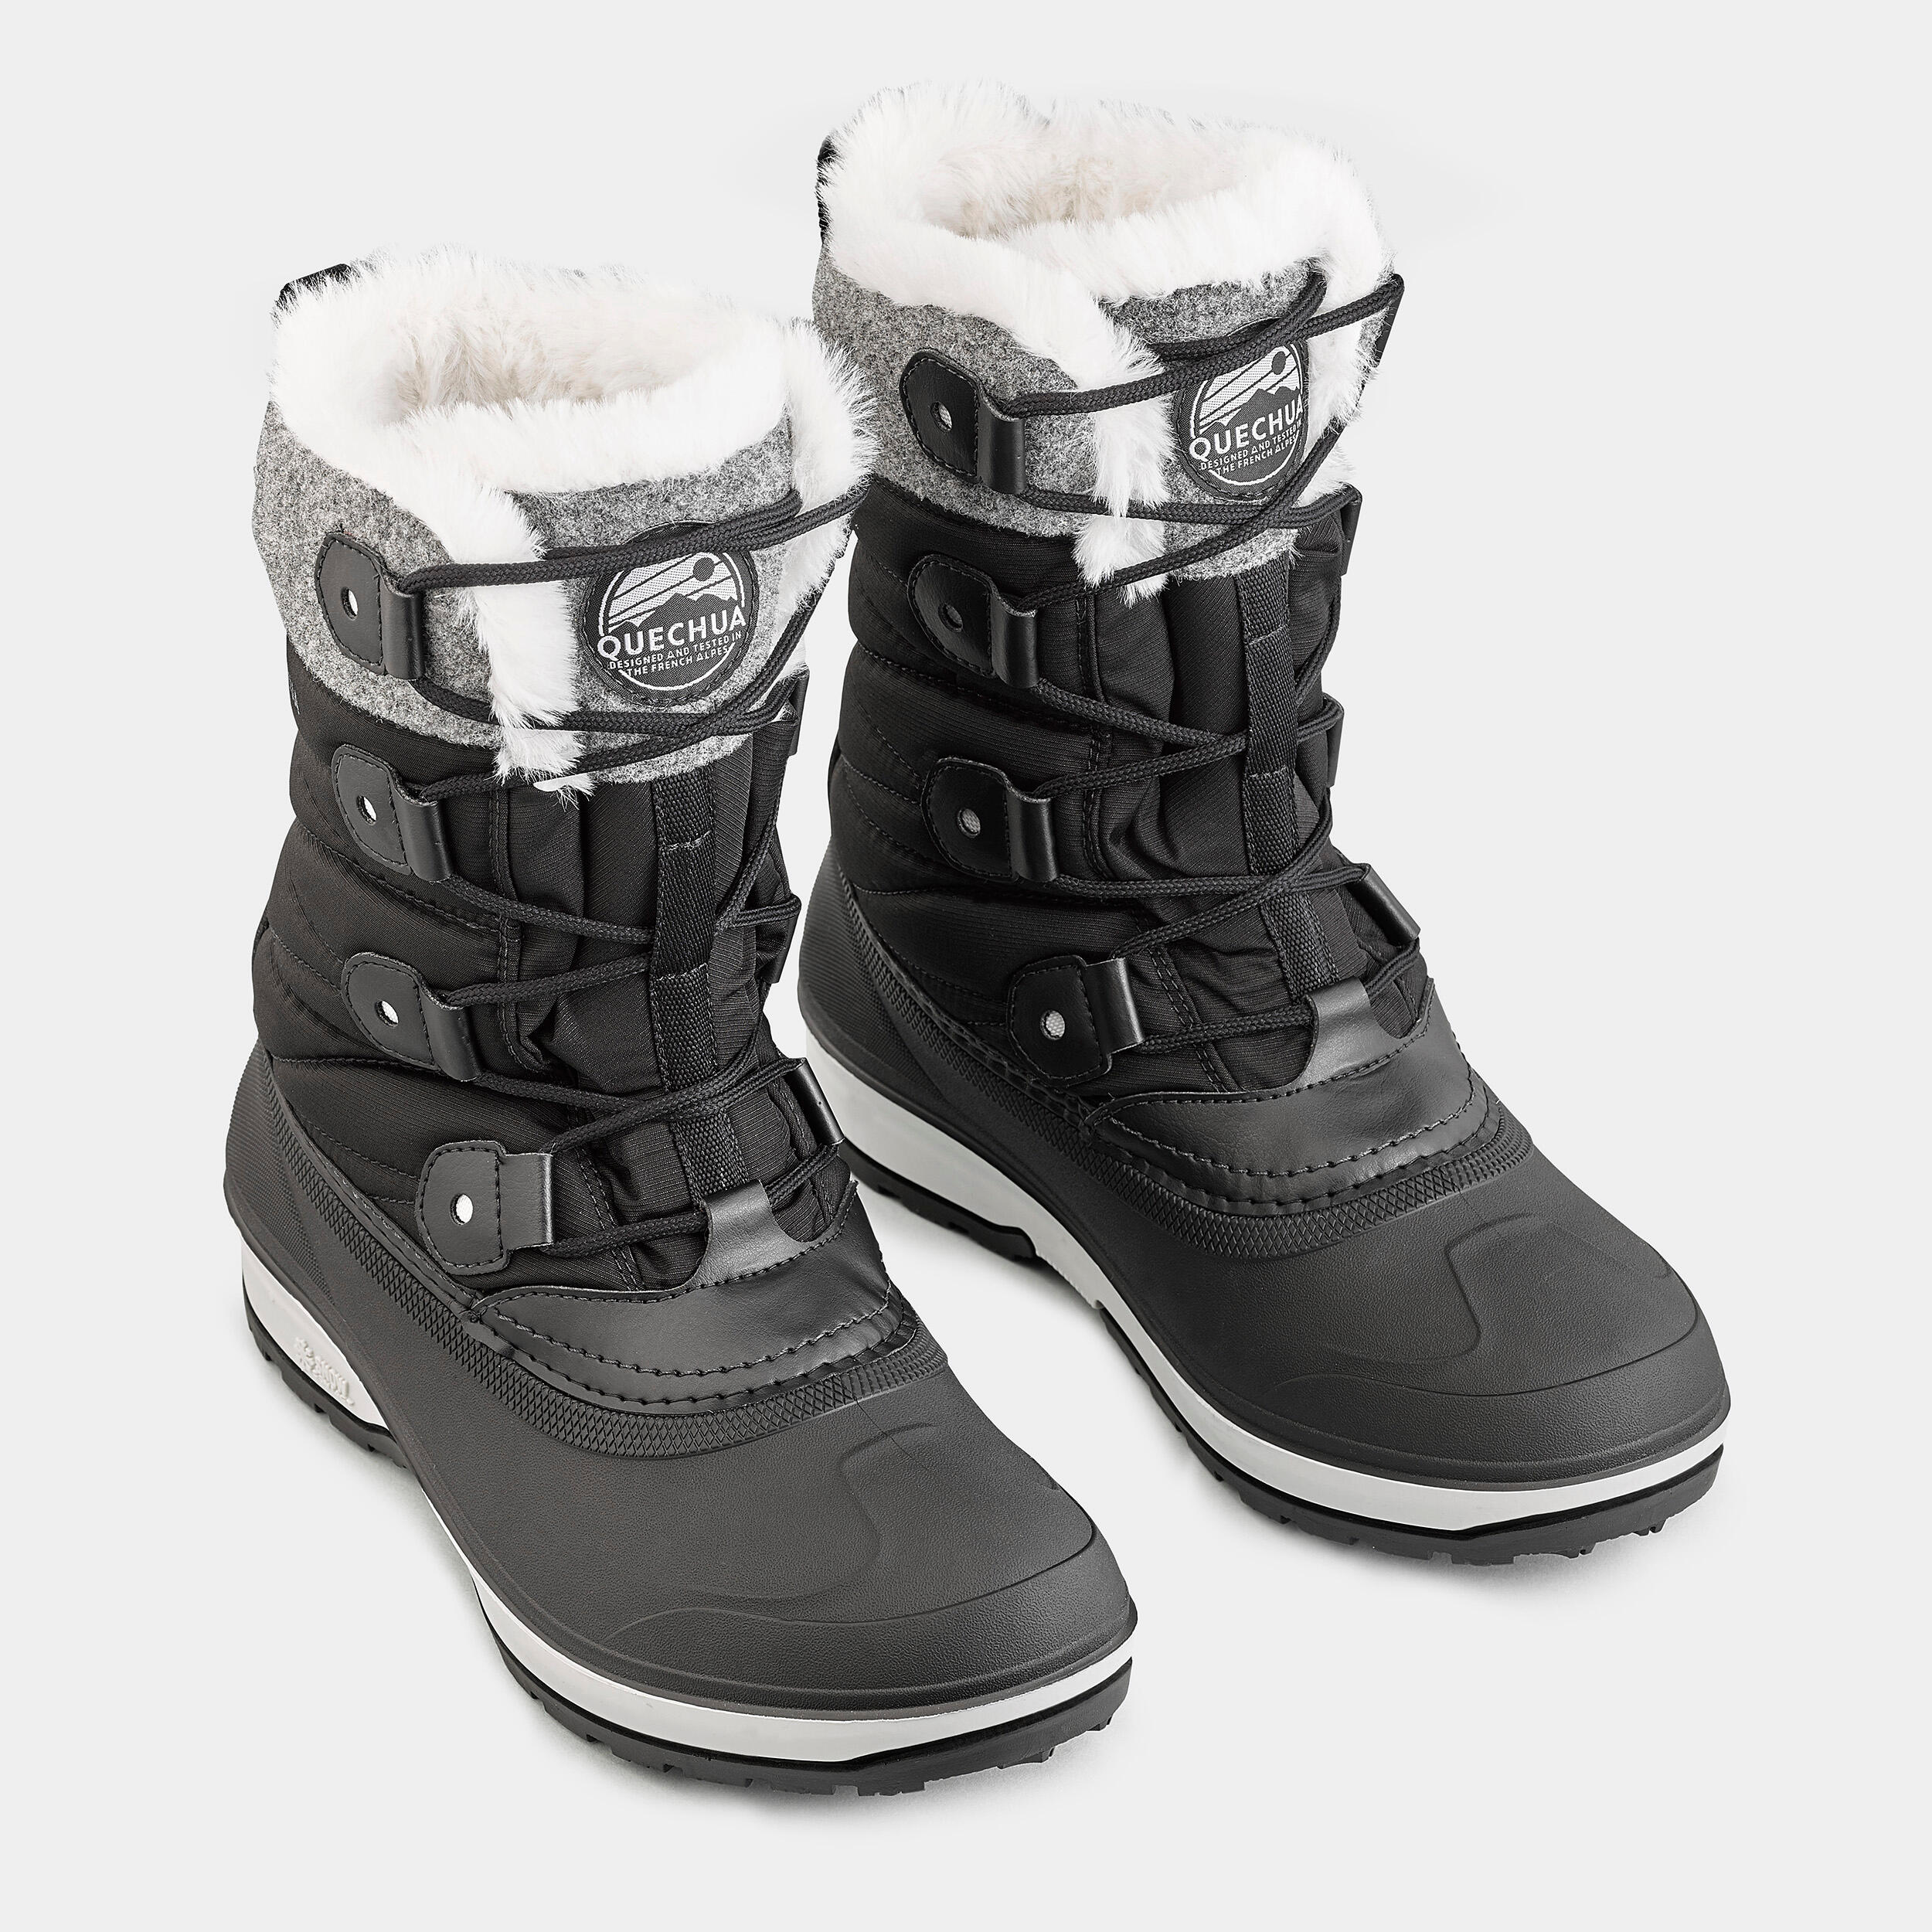 Women's waterproof warm snow boots - SH500 high boot  4/7